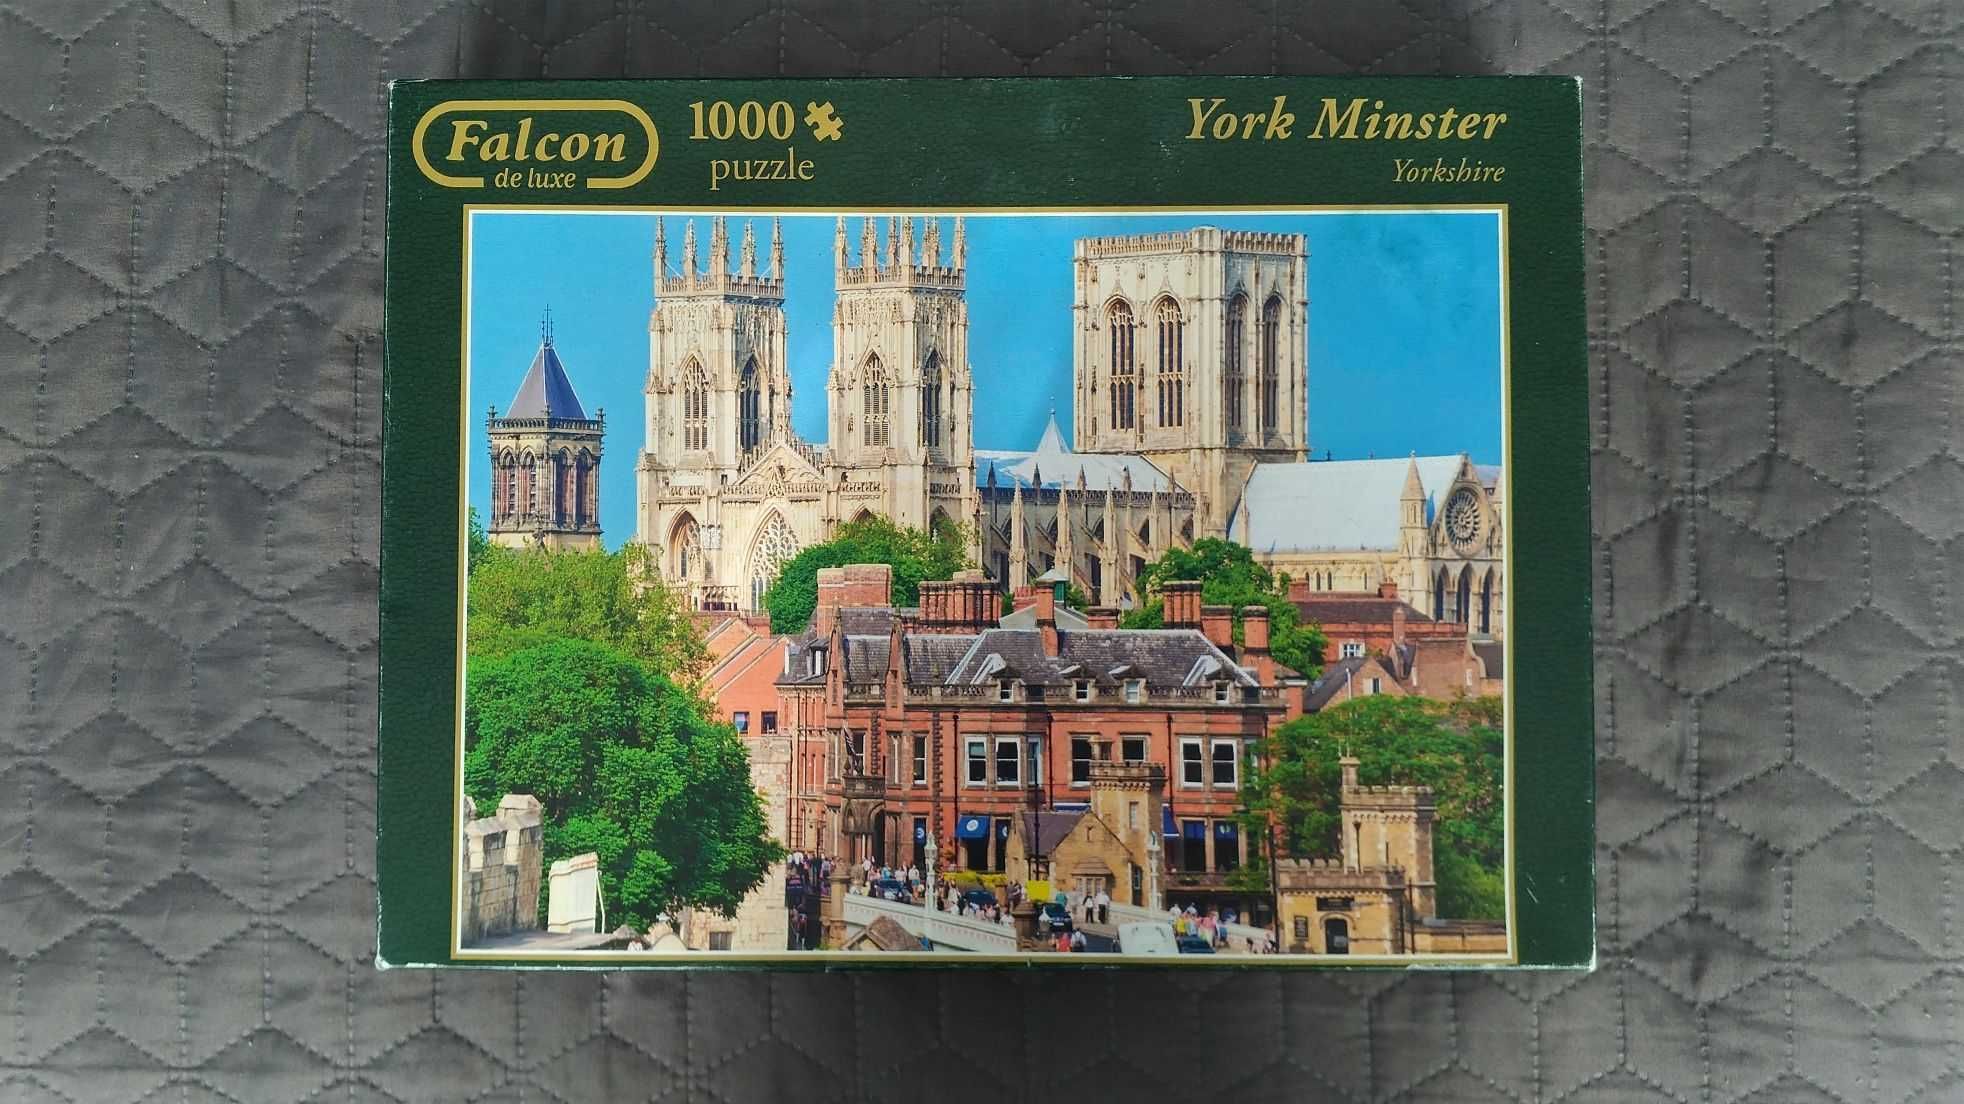 Puzzle 1000 Jumbo FALCON de luxe Katedra York Minster Yorkshire